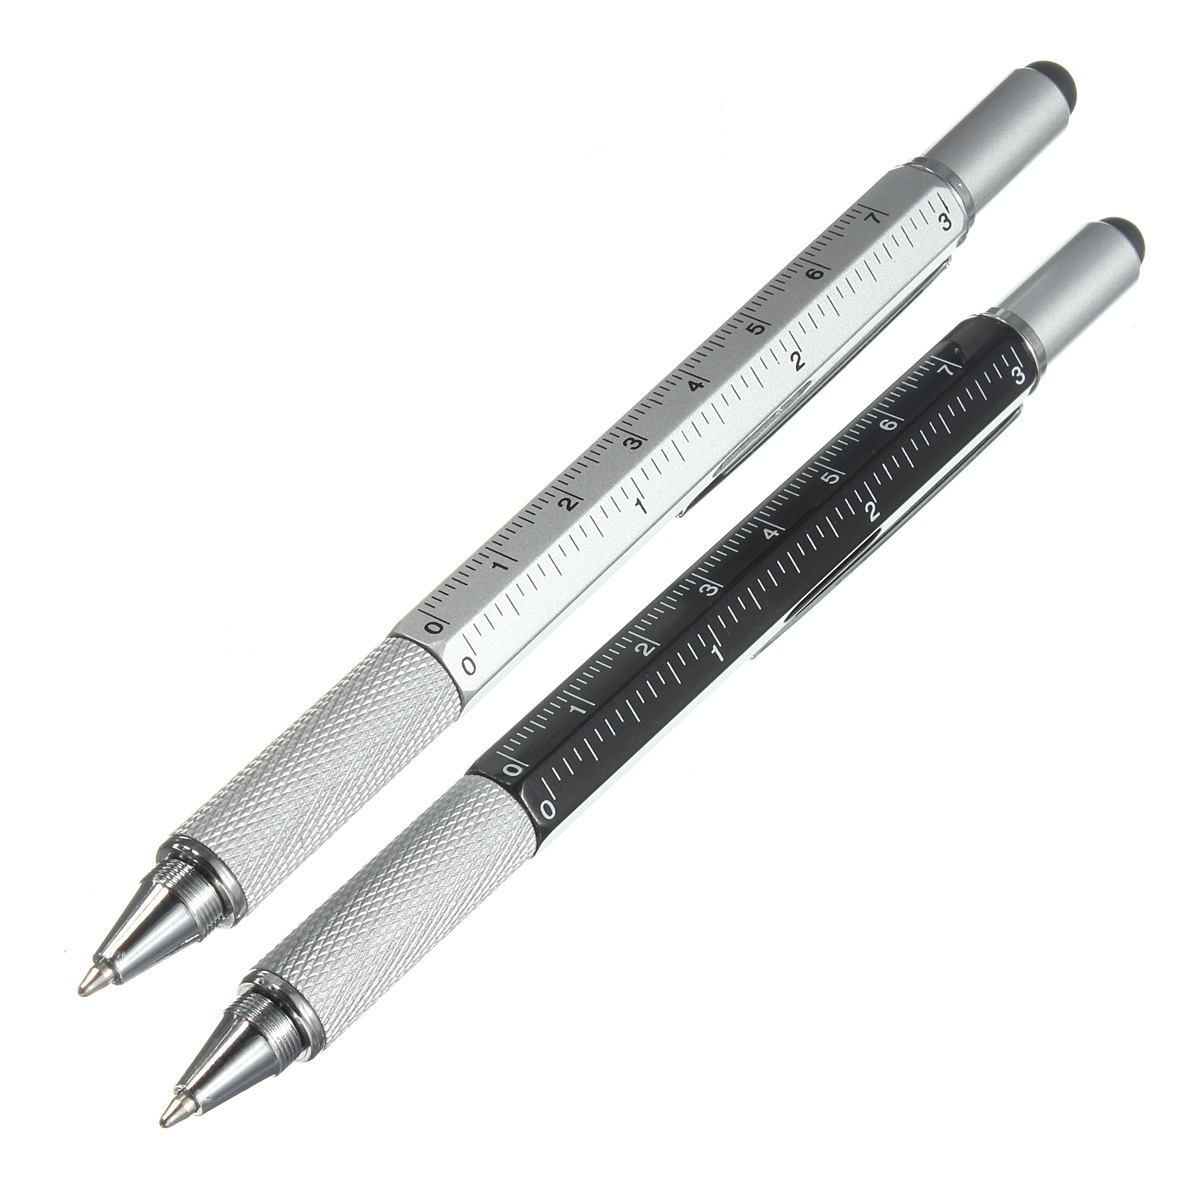 6 in 1 Metal Multitool Pen Handy Screwdriver Ruler Spirit Level 1